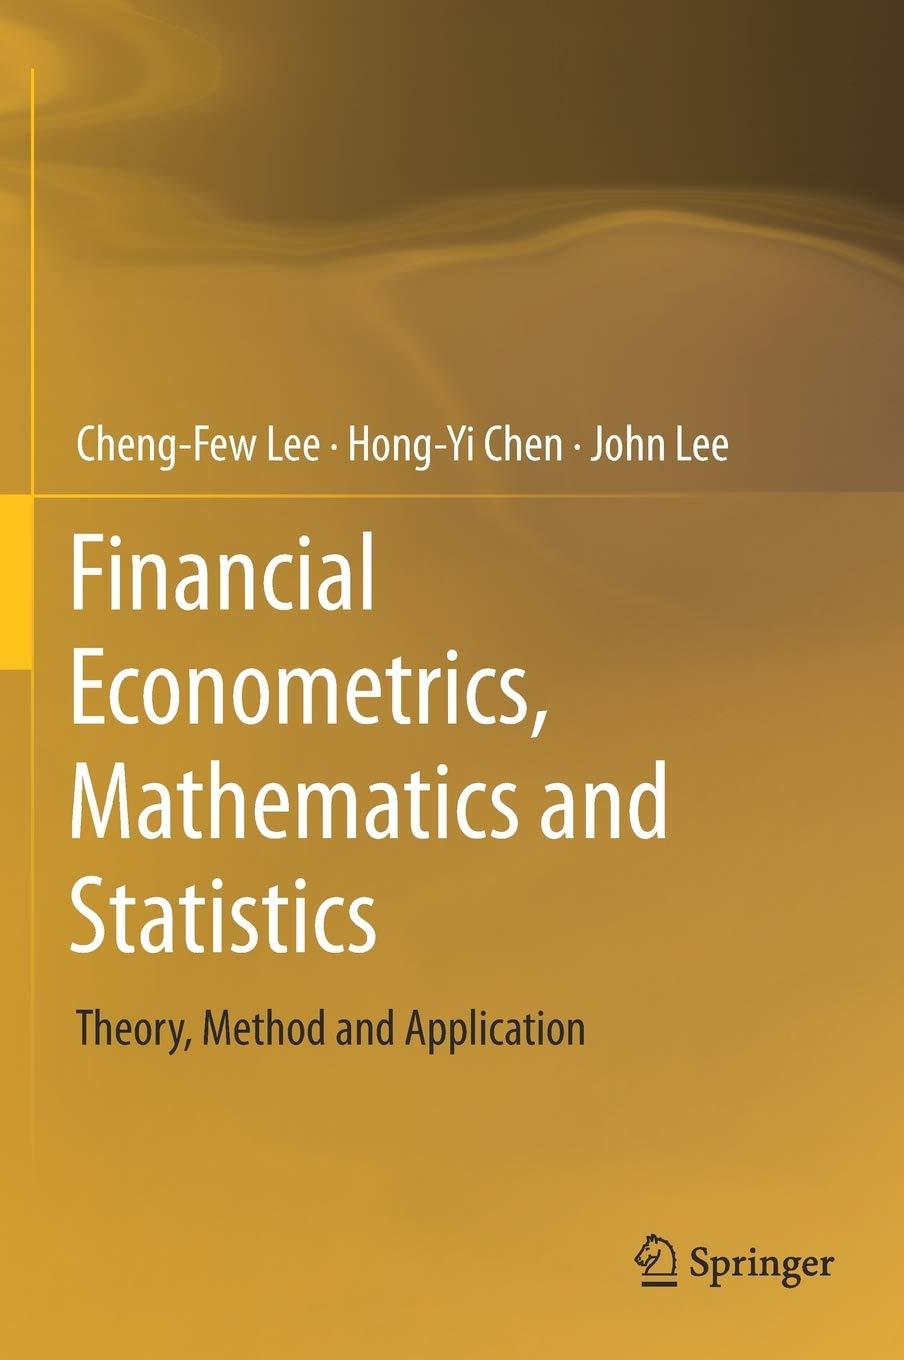 financial econometrics mathematics and statistics theory method and application 1st edition cheng-few lee,